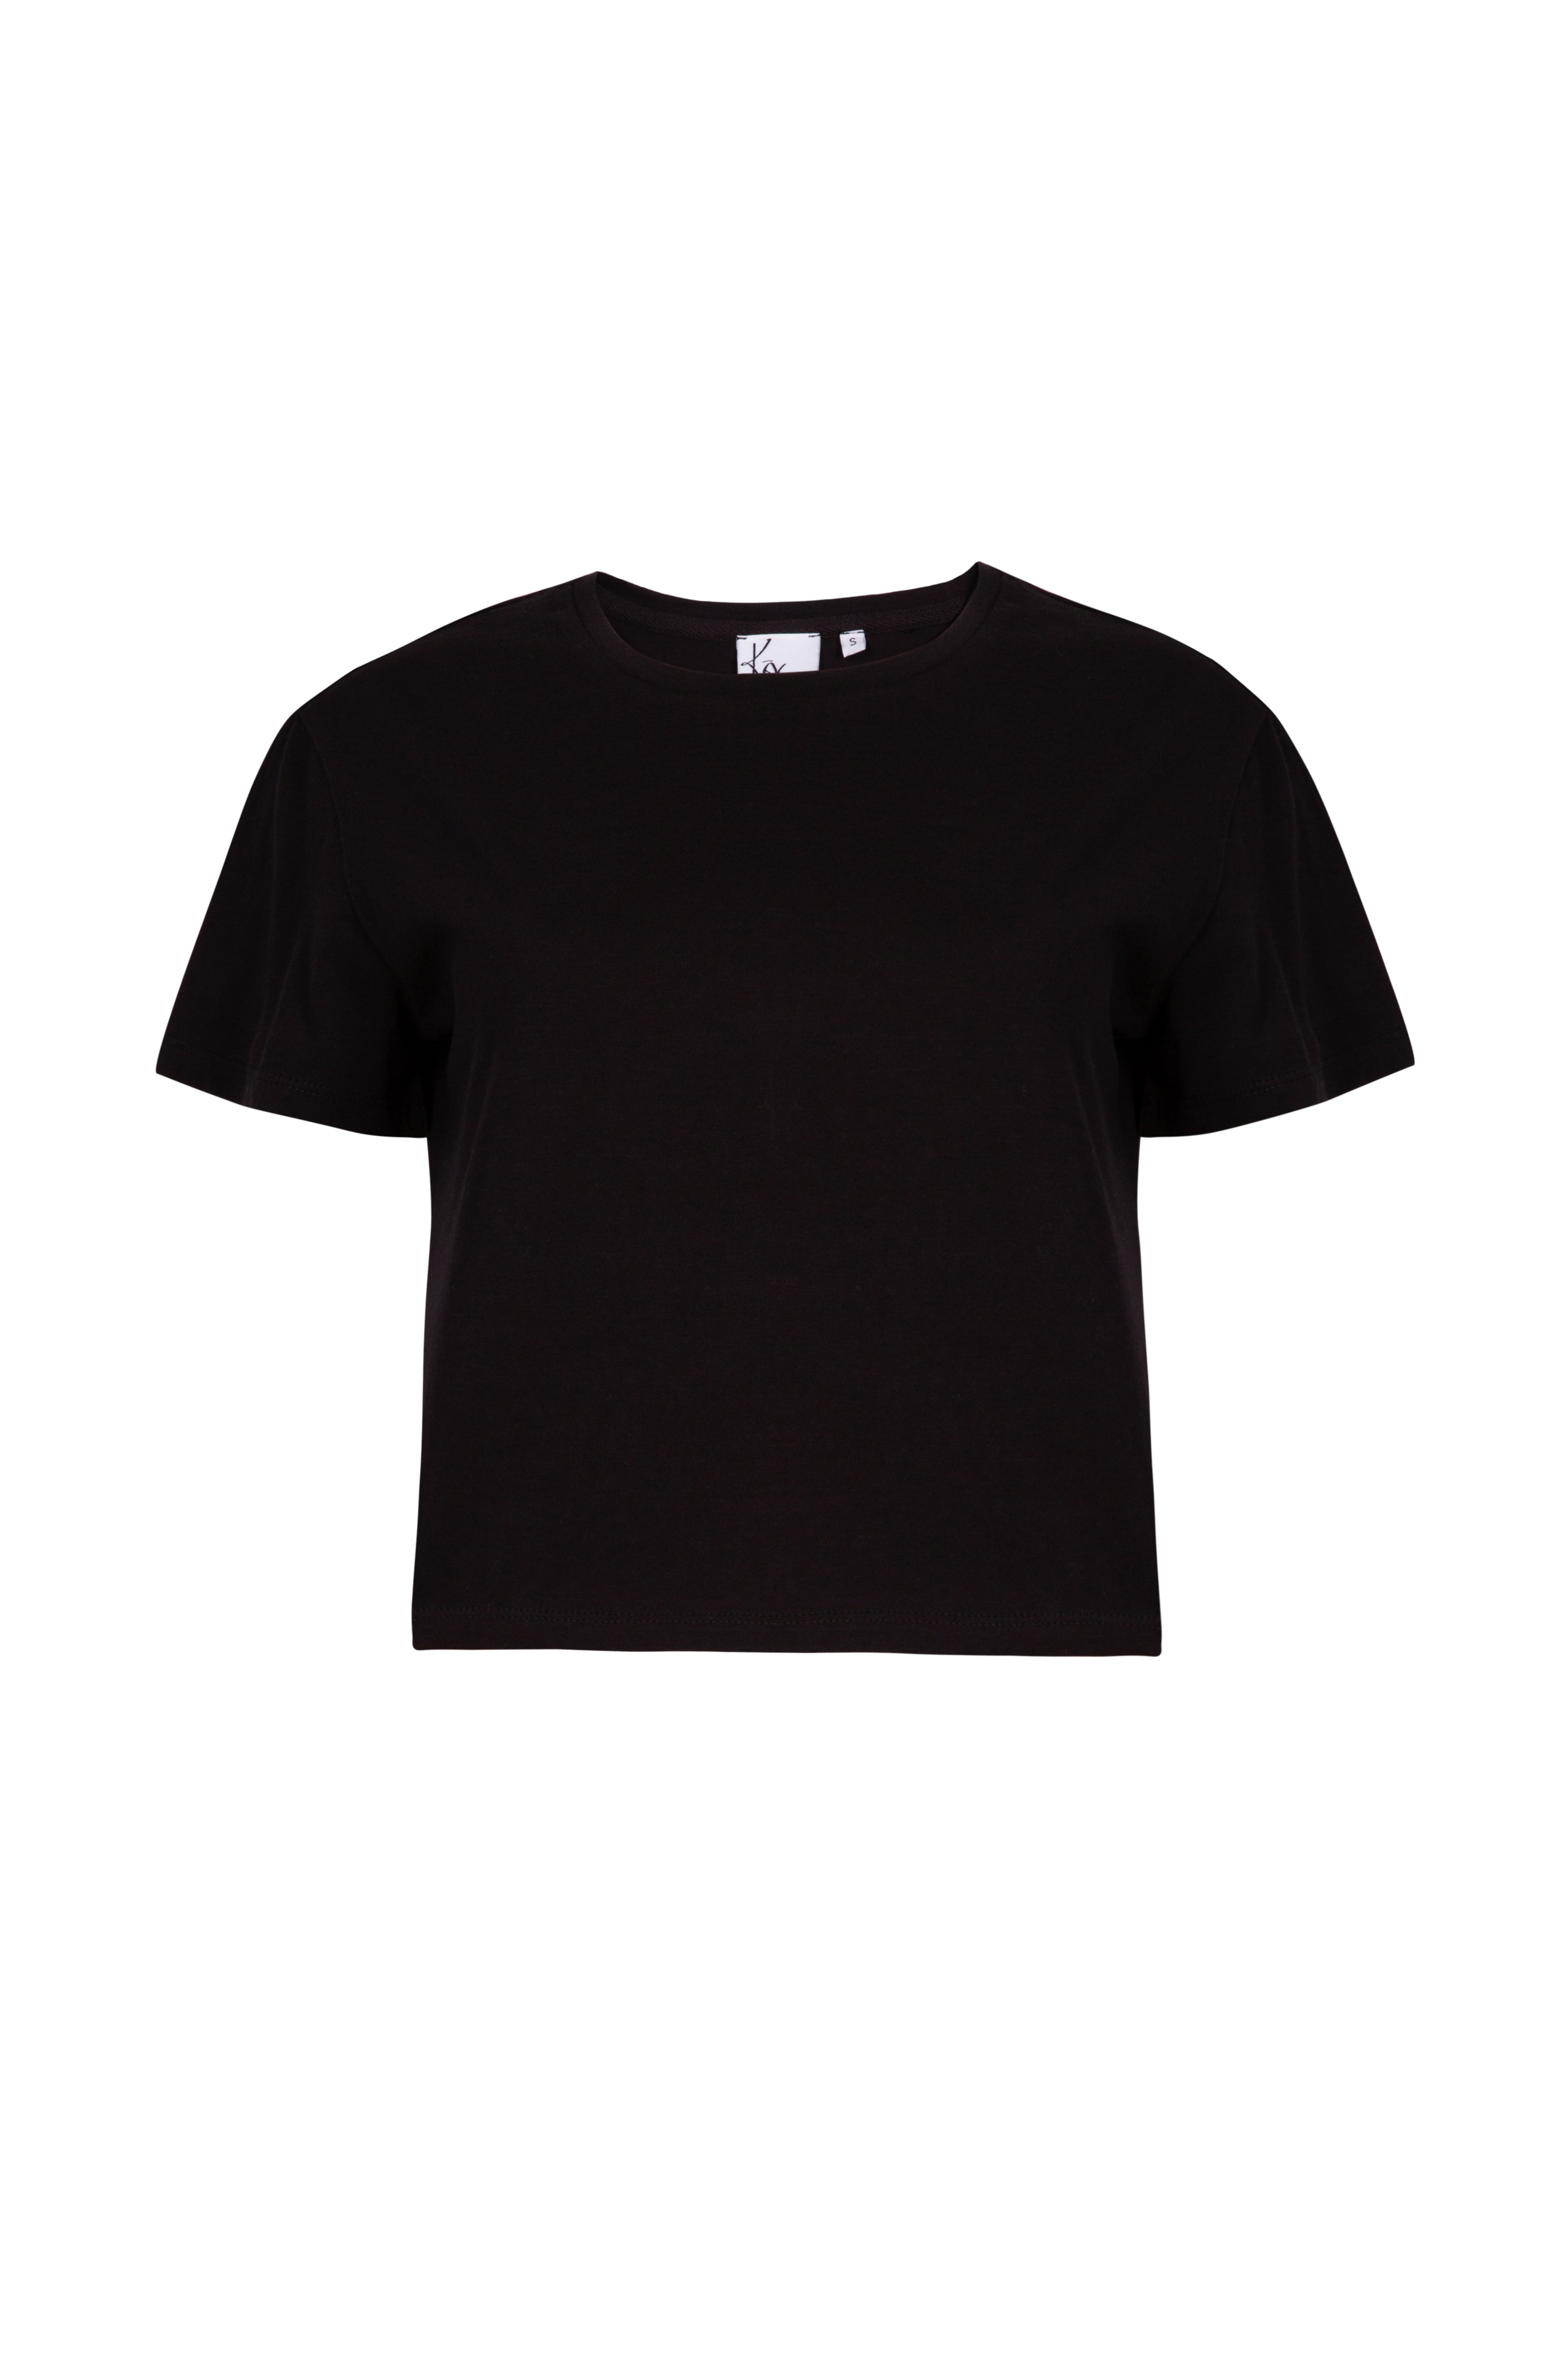 Black organic cotton boxy fit women's T-shirt